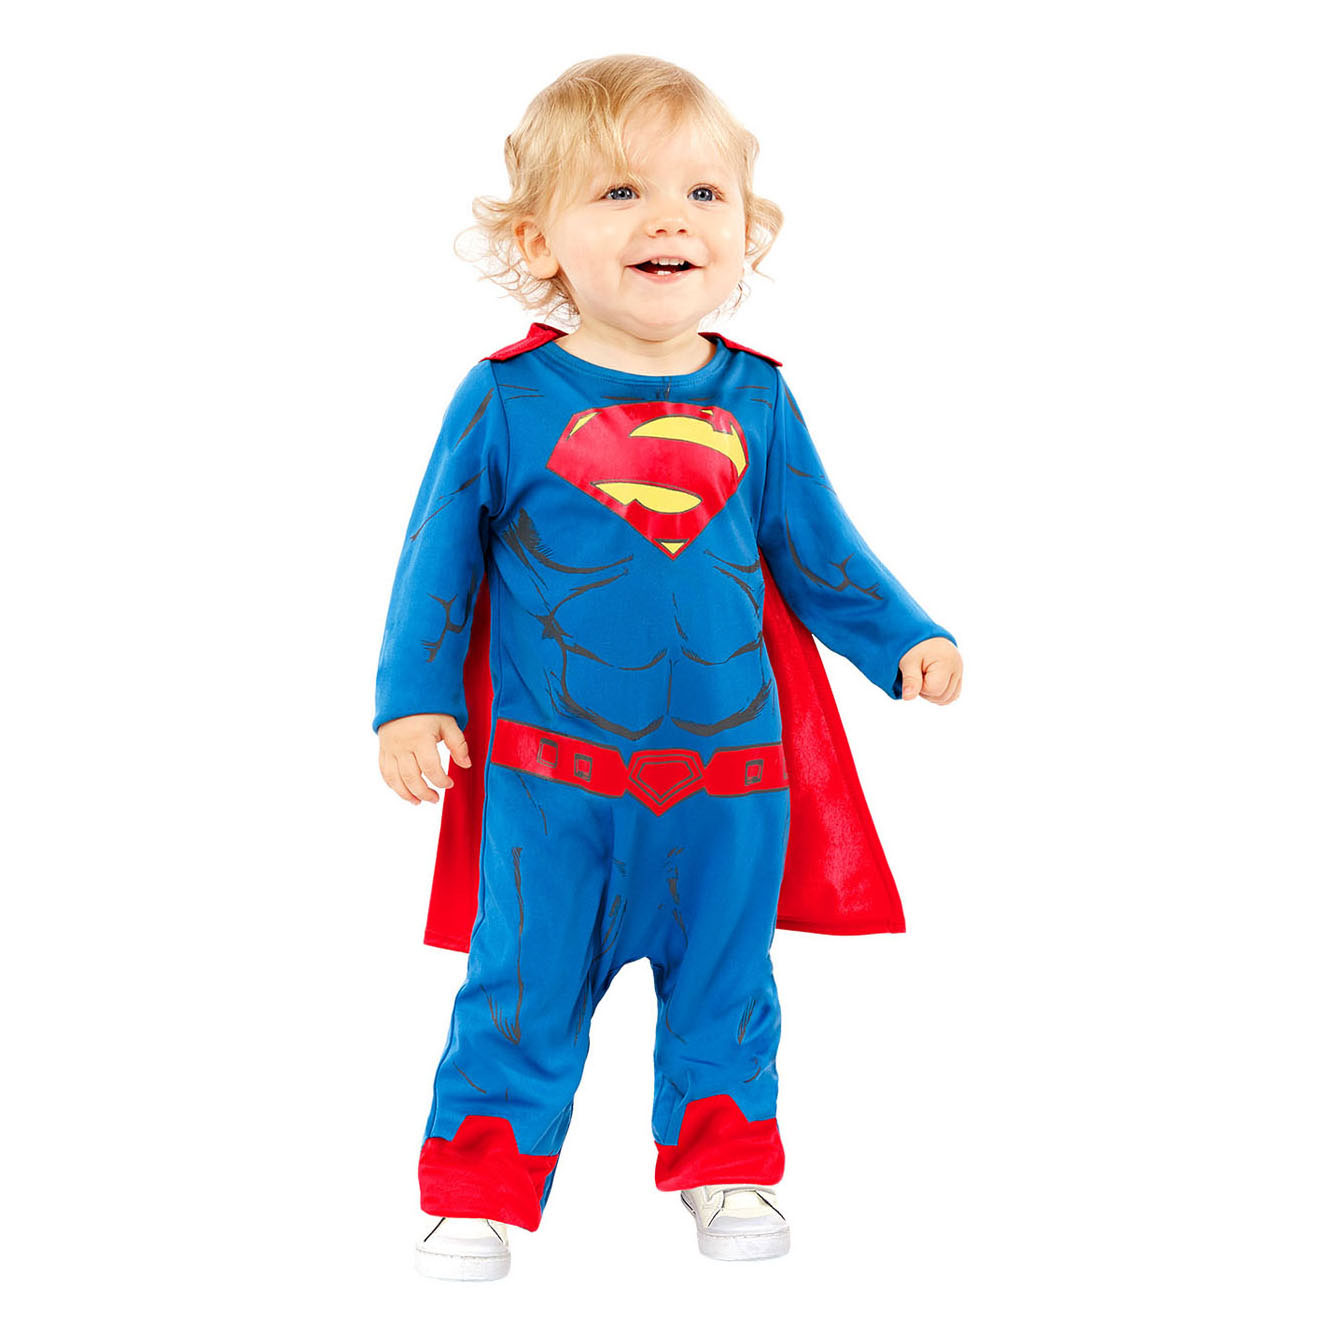 Kinderkostüm Superman, 2-3 Jahre.